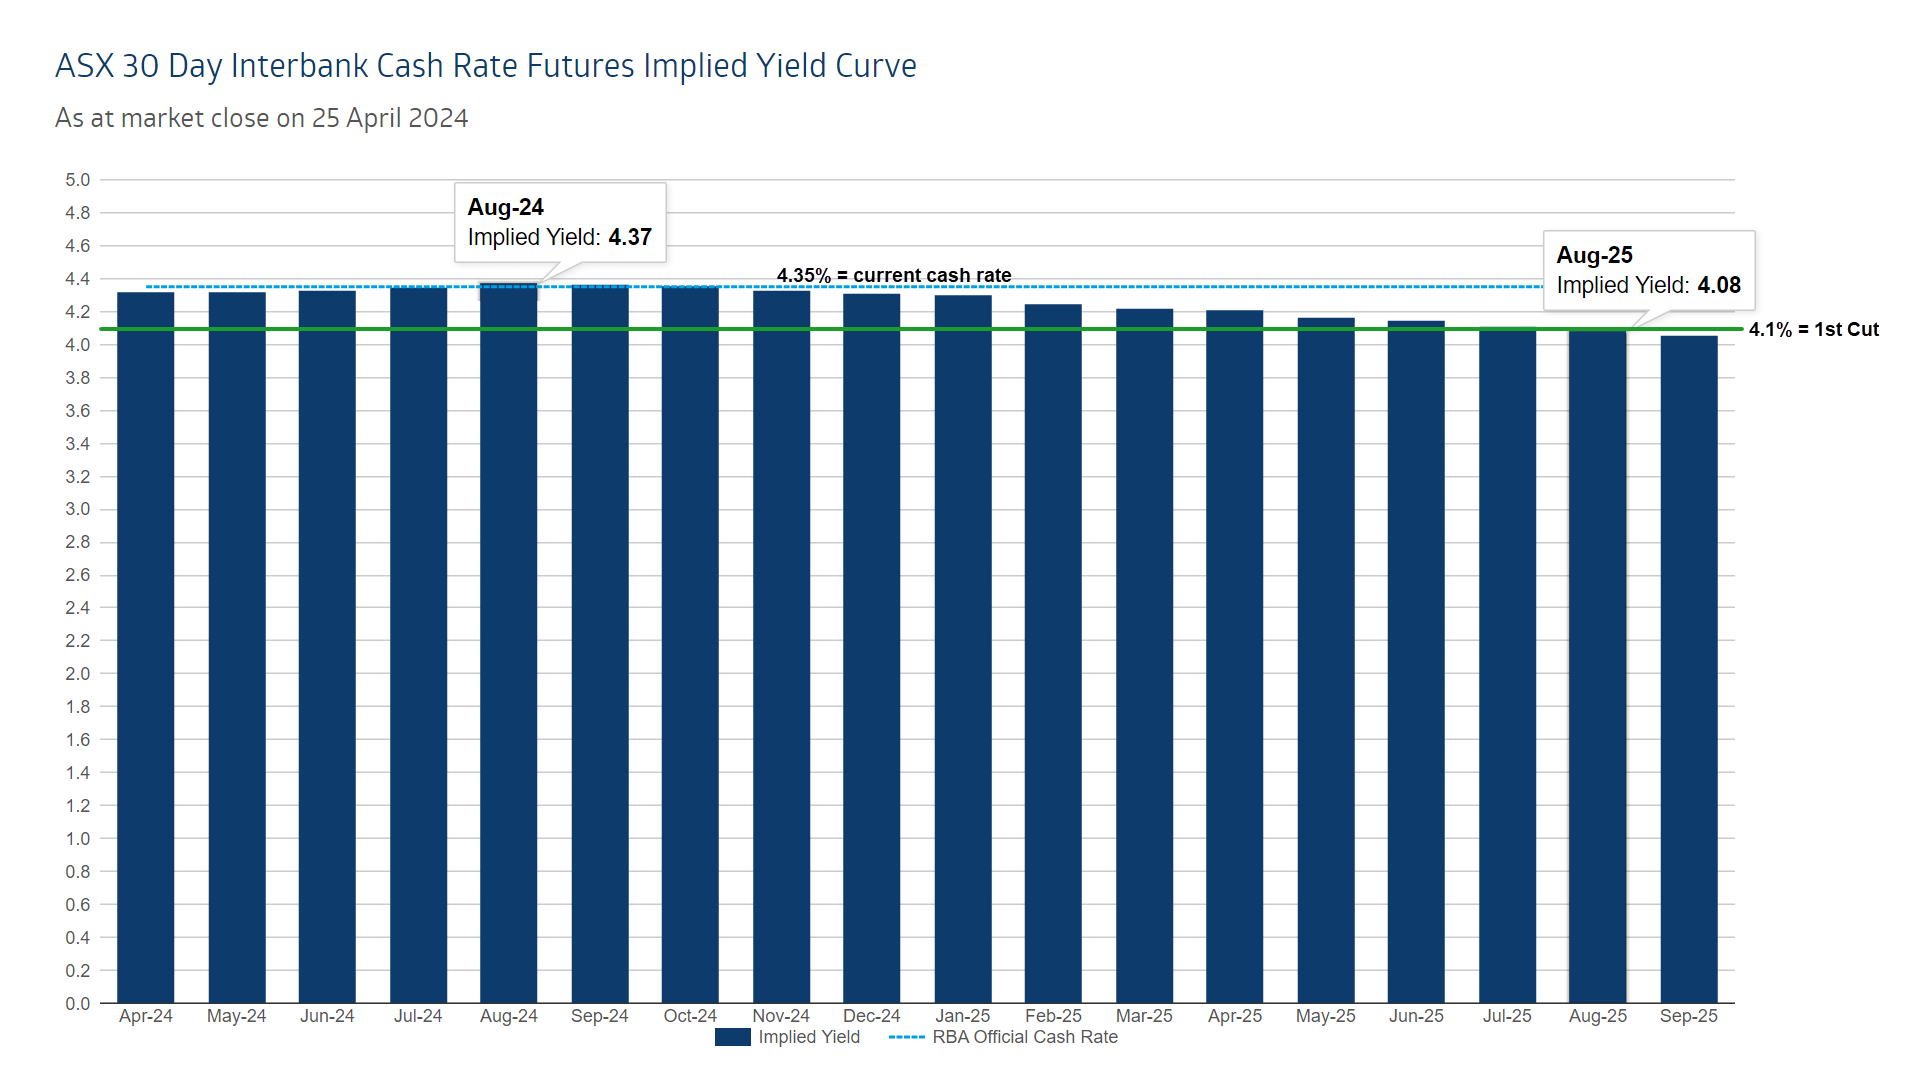 RBA first cut timing via implied yield curve